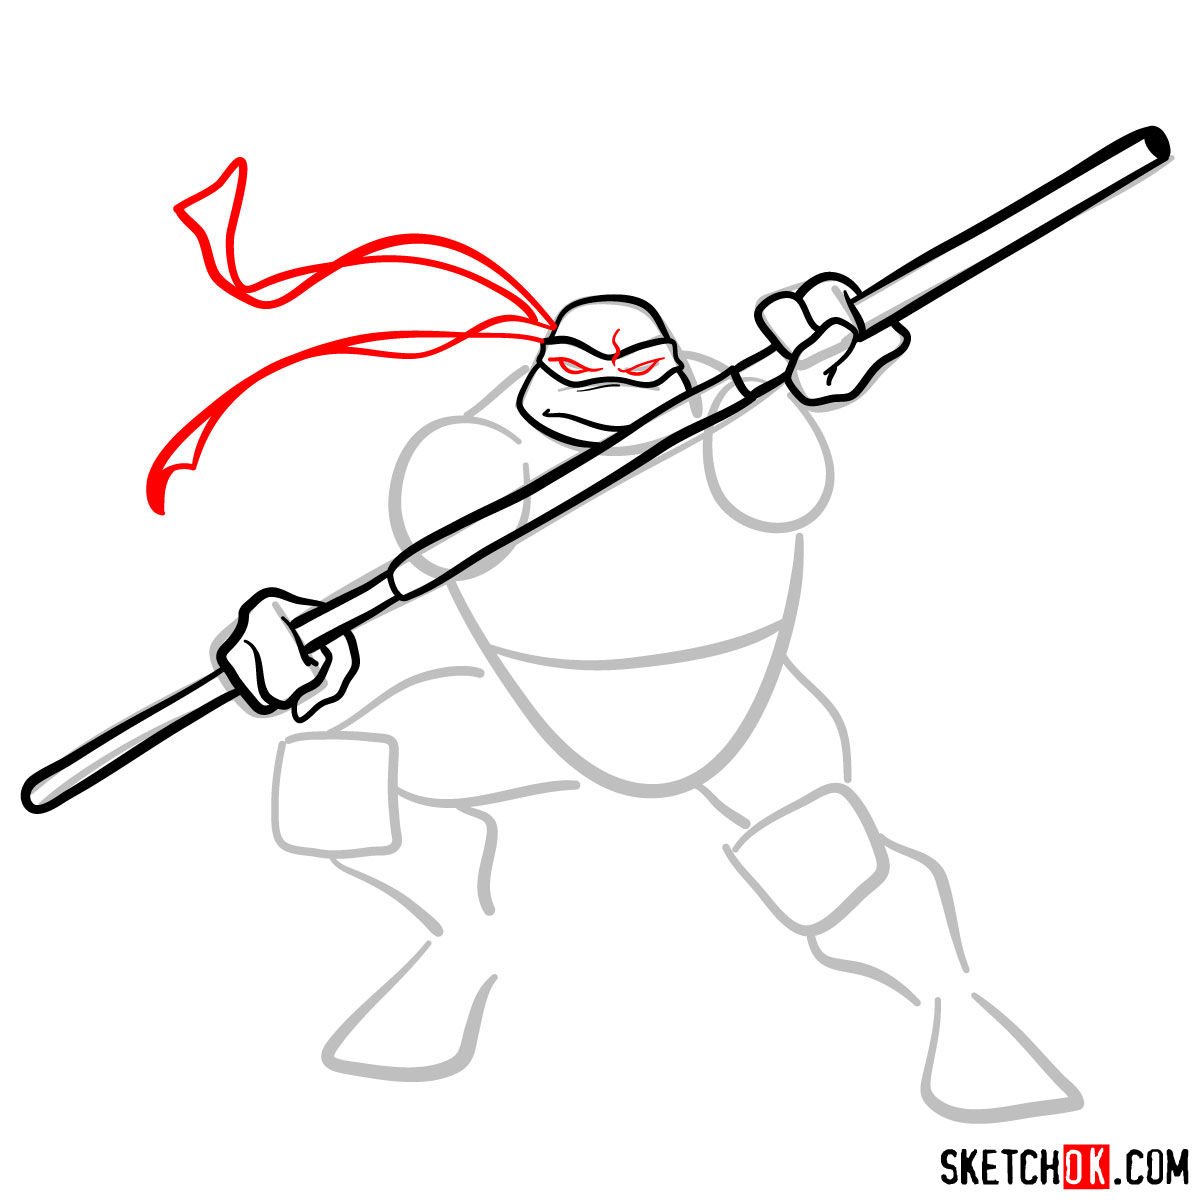 How to draw Donatello ninja turtle - step 06